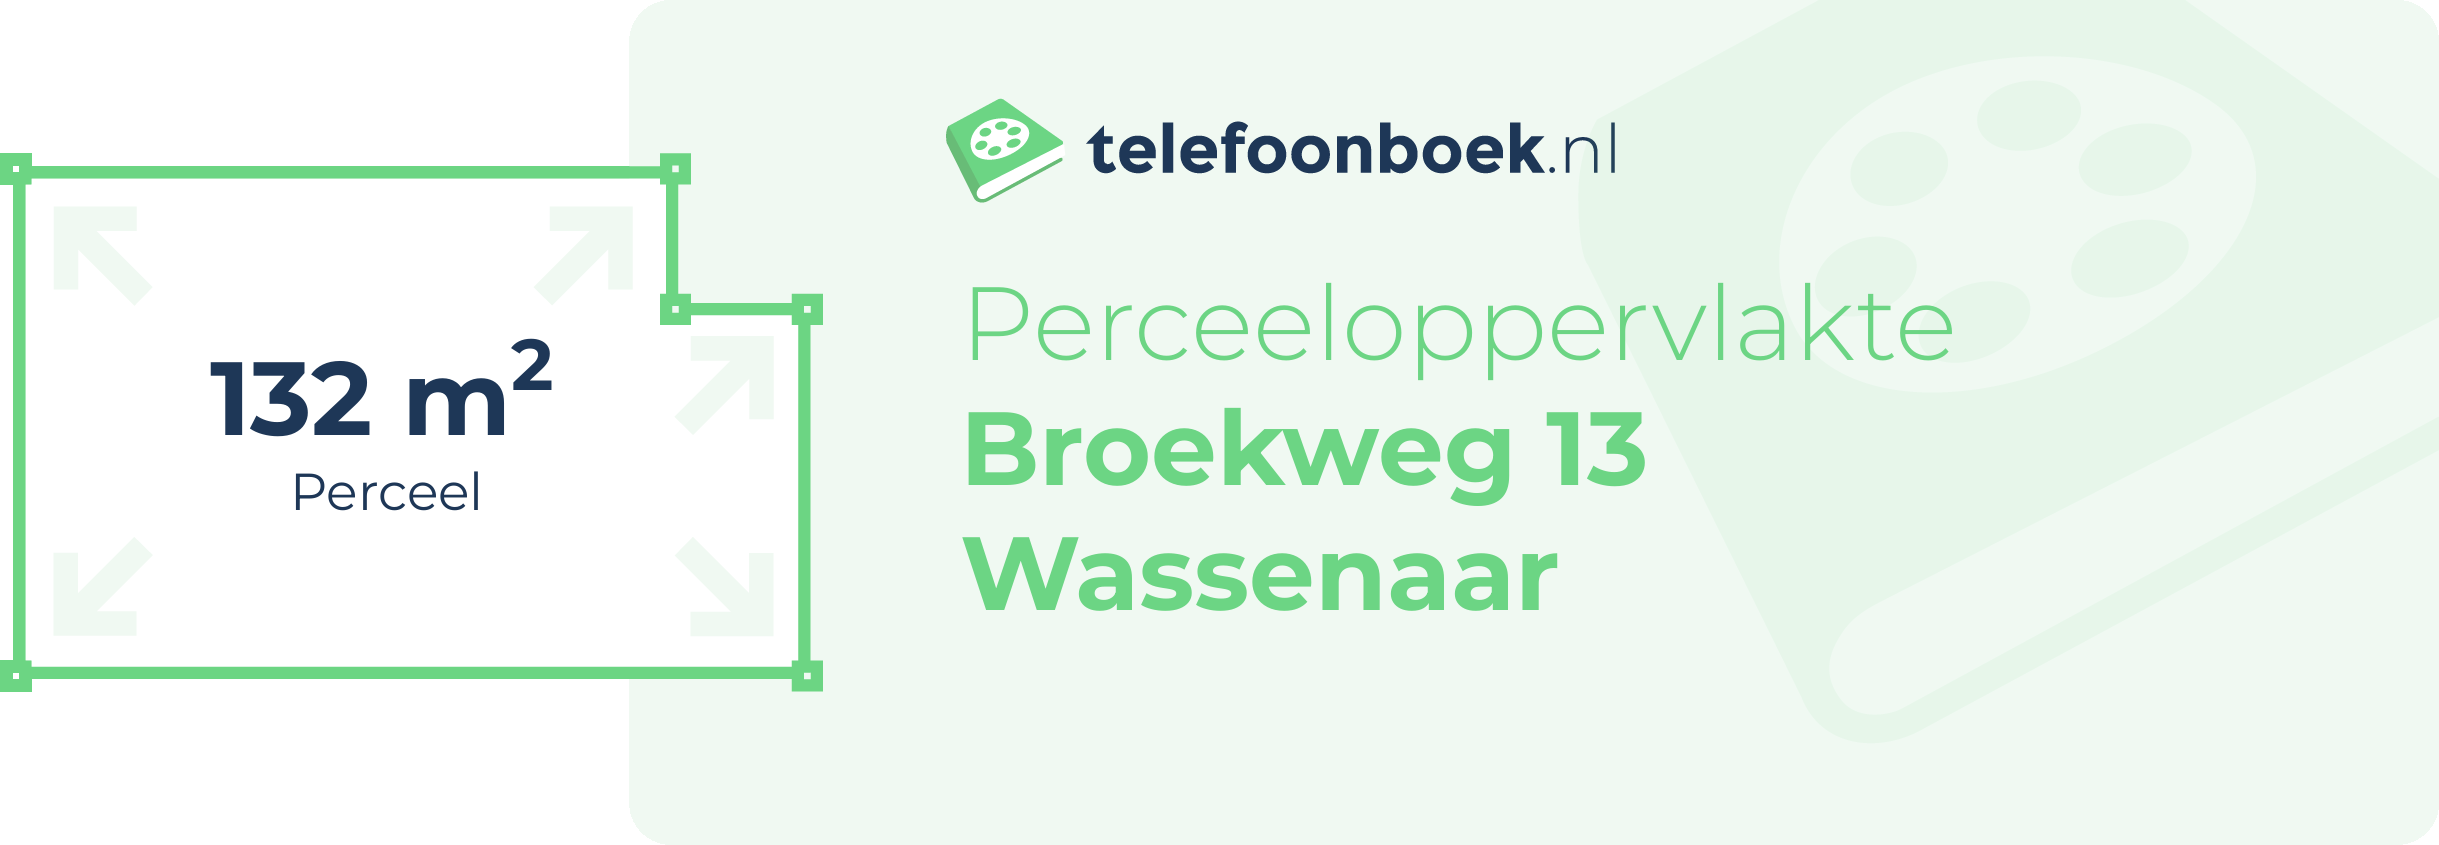 Perceeloppervlakte Broekweg 13 Wassenaar